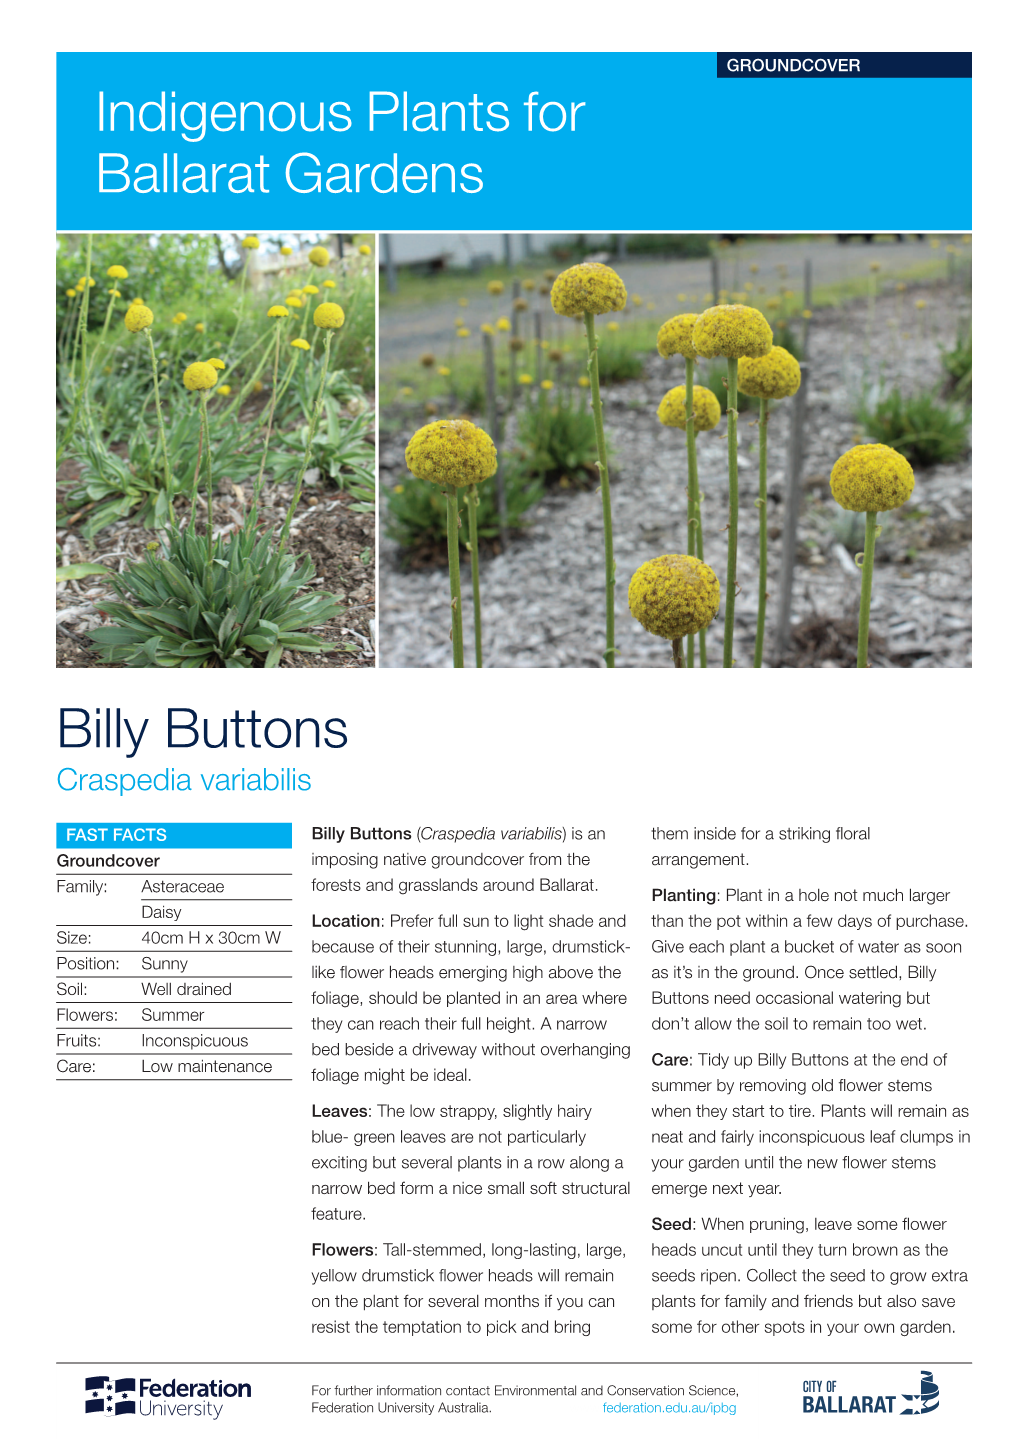 Billy Buttons Indigenous Plants for Ballarat Gardens